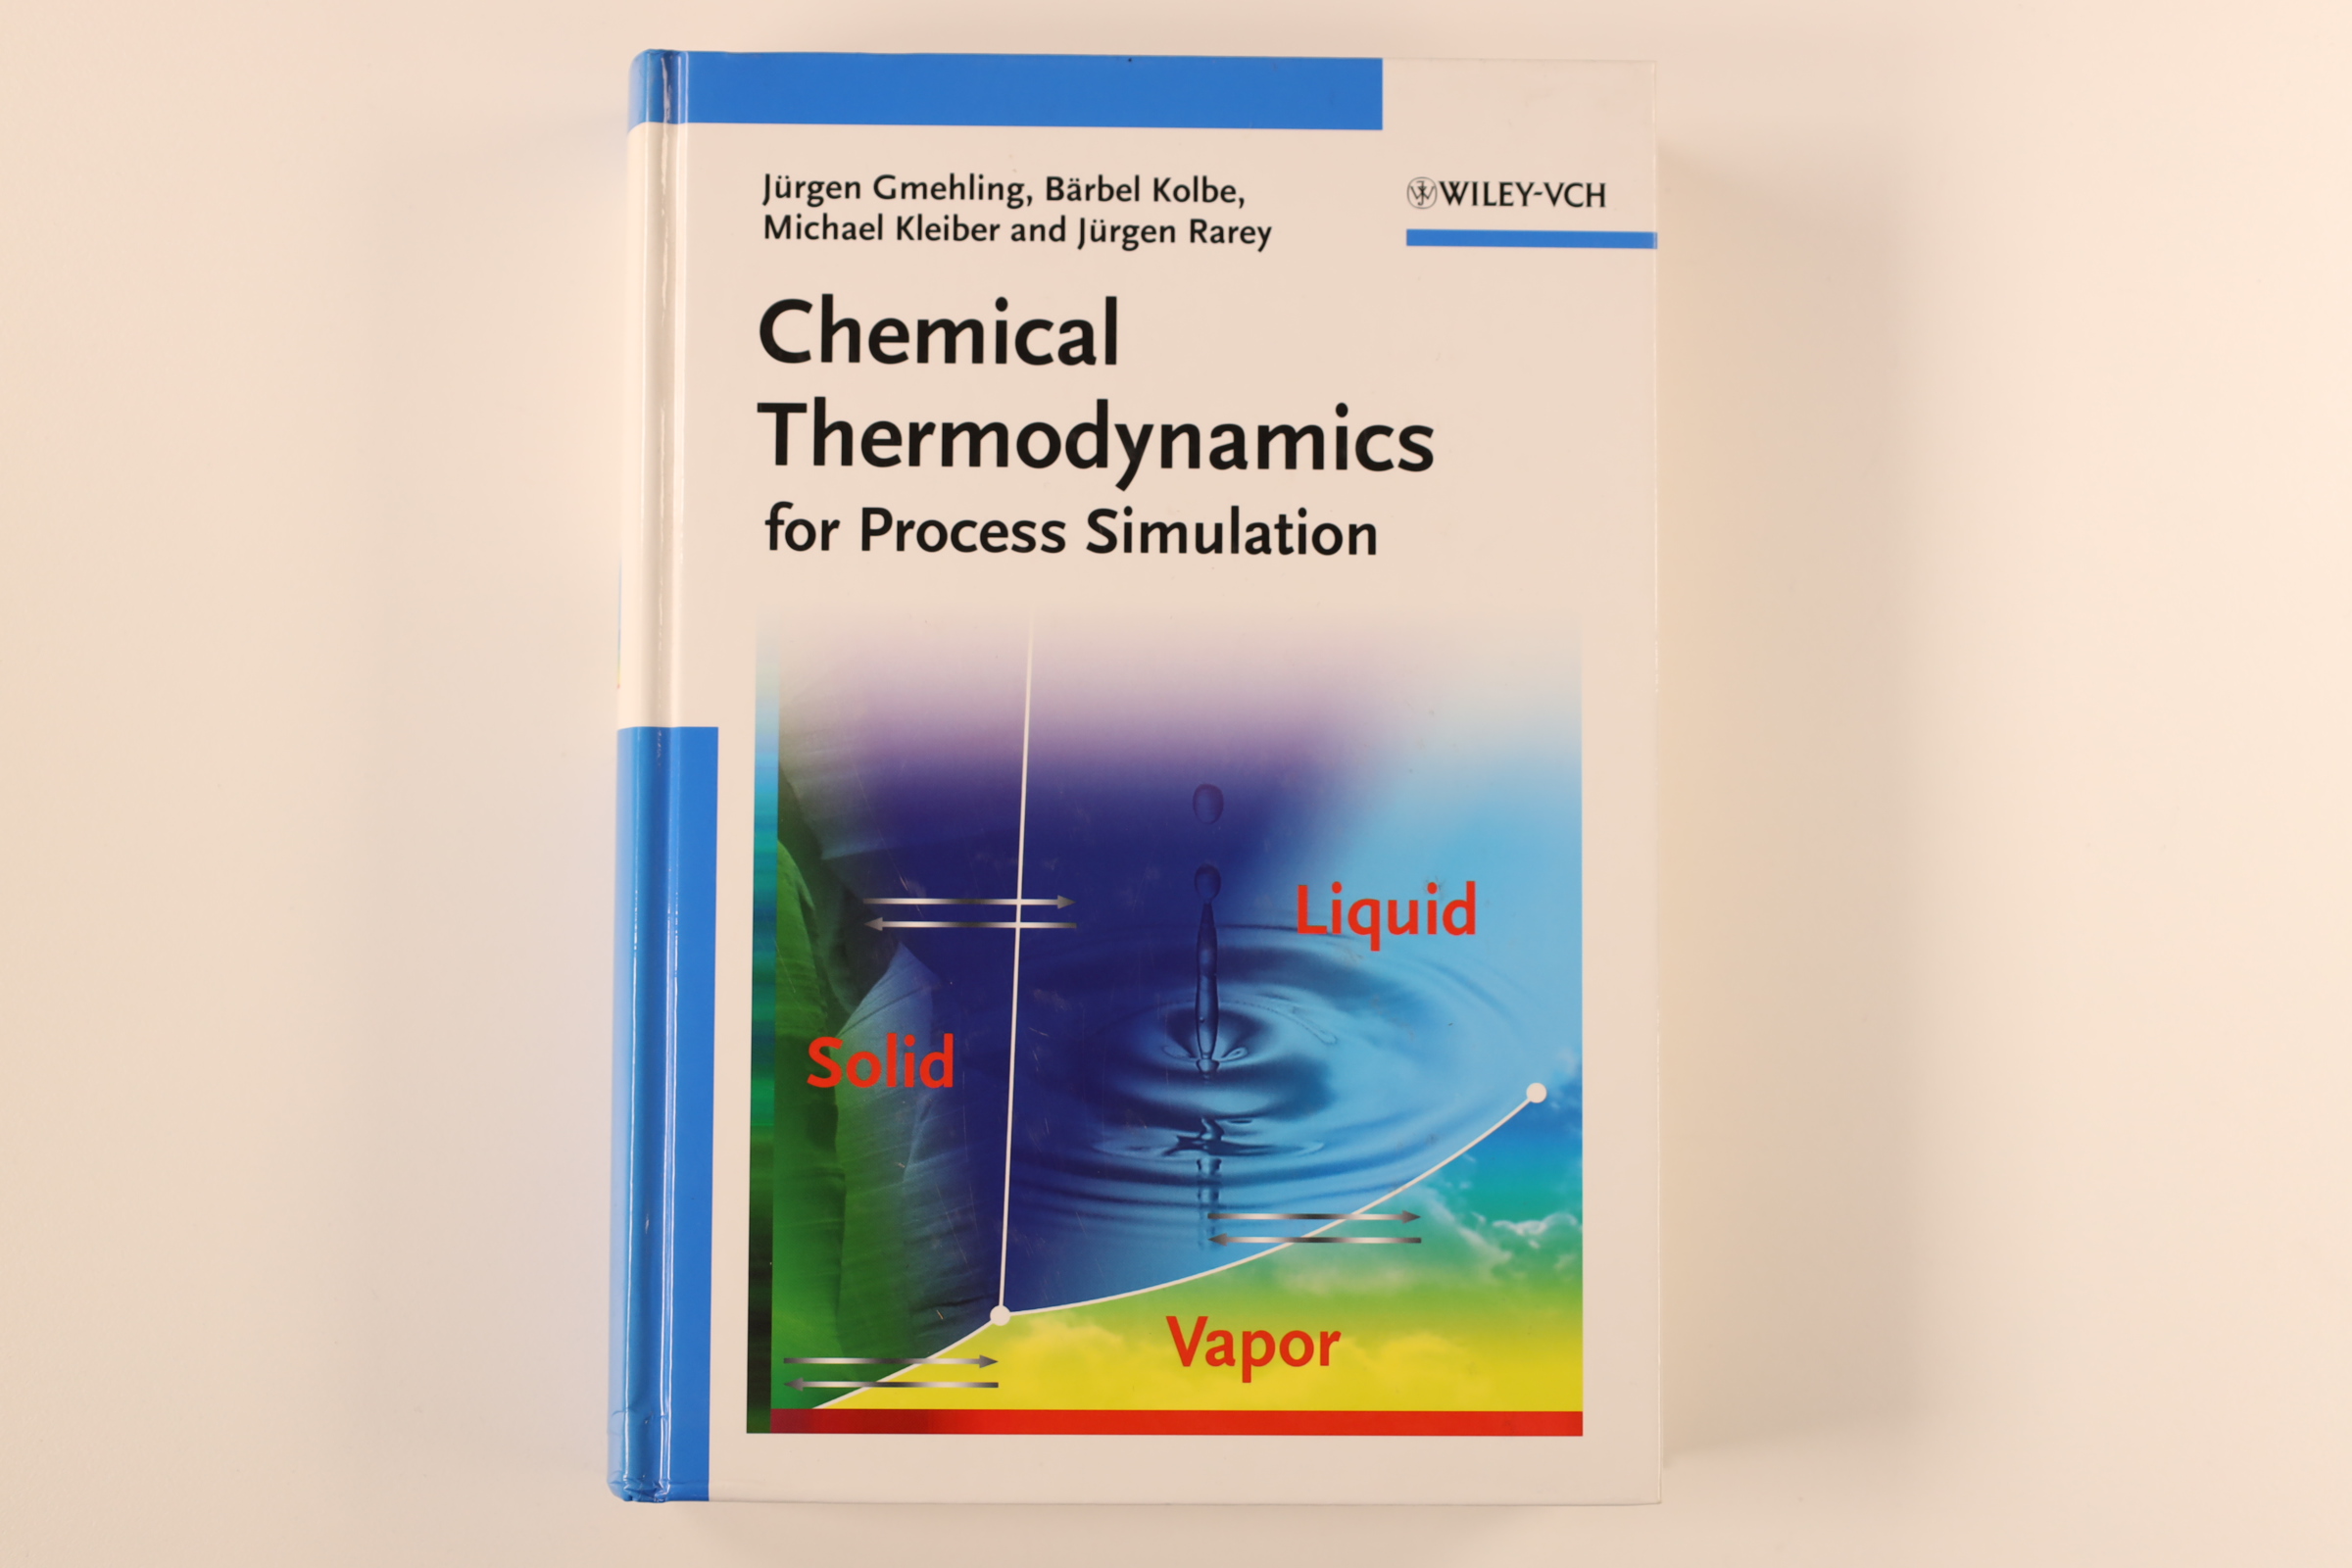 CHEMICAL THERMODYNAMICS FOR PROCESS SIMULATION. - Gmehling, Jürgen; Kolbe, Bärbel; Kleiber, Michael; Rarey, Jürgen; ;